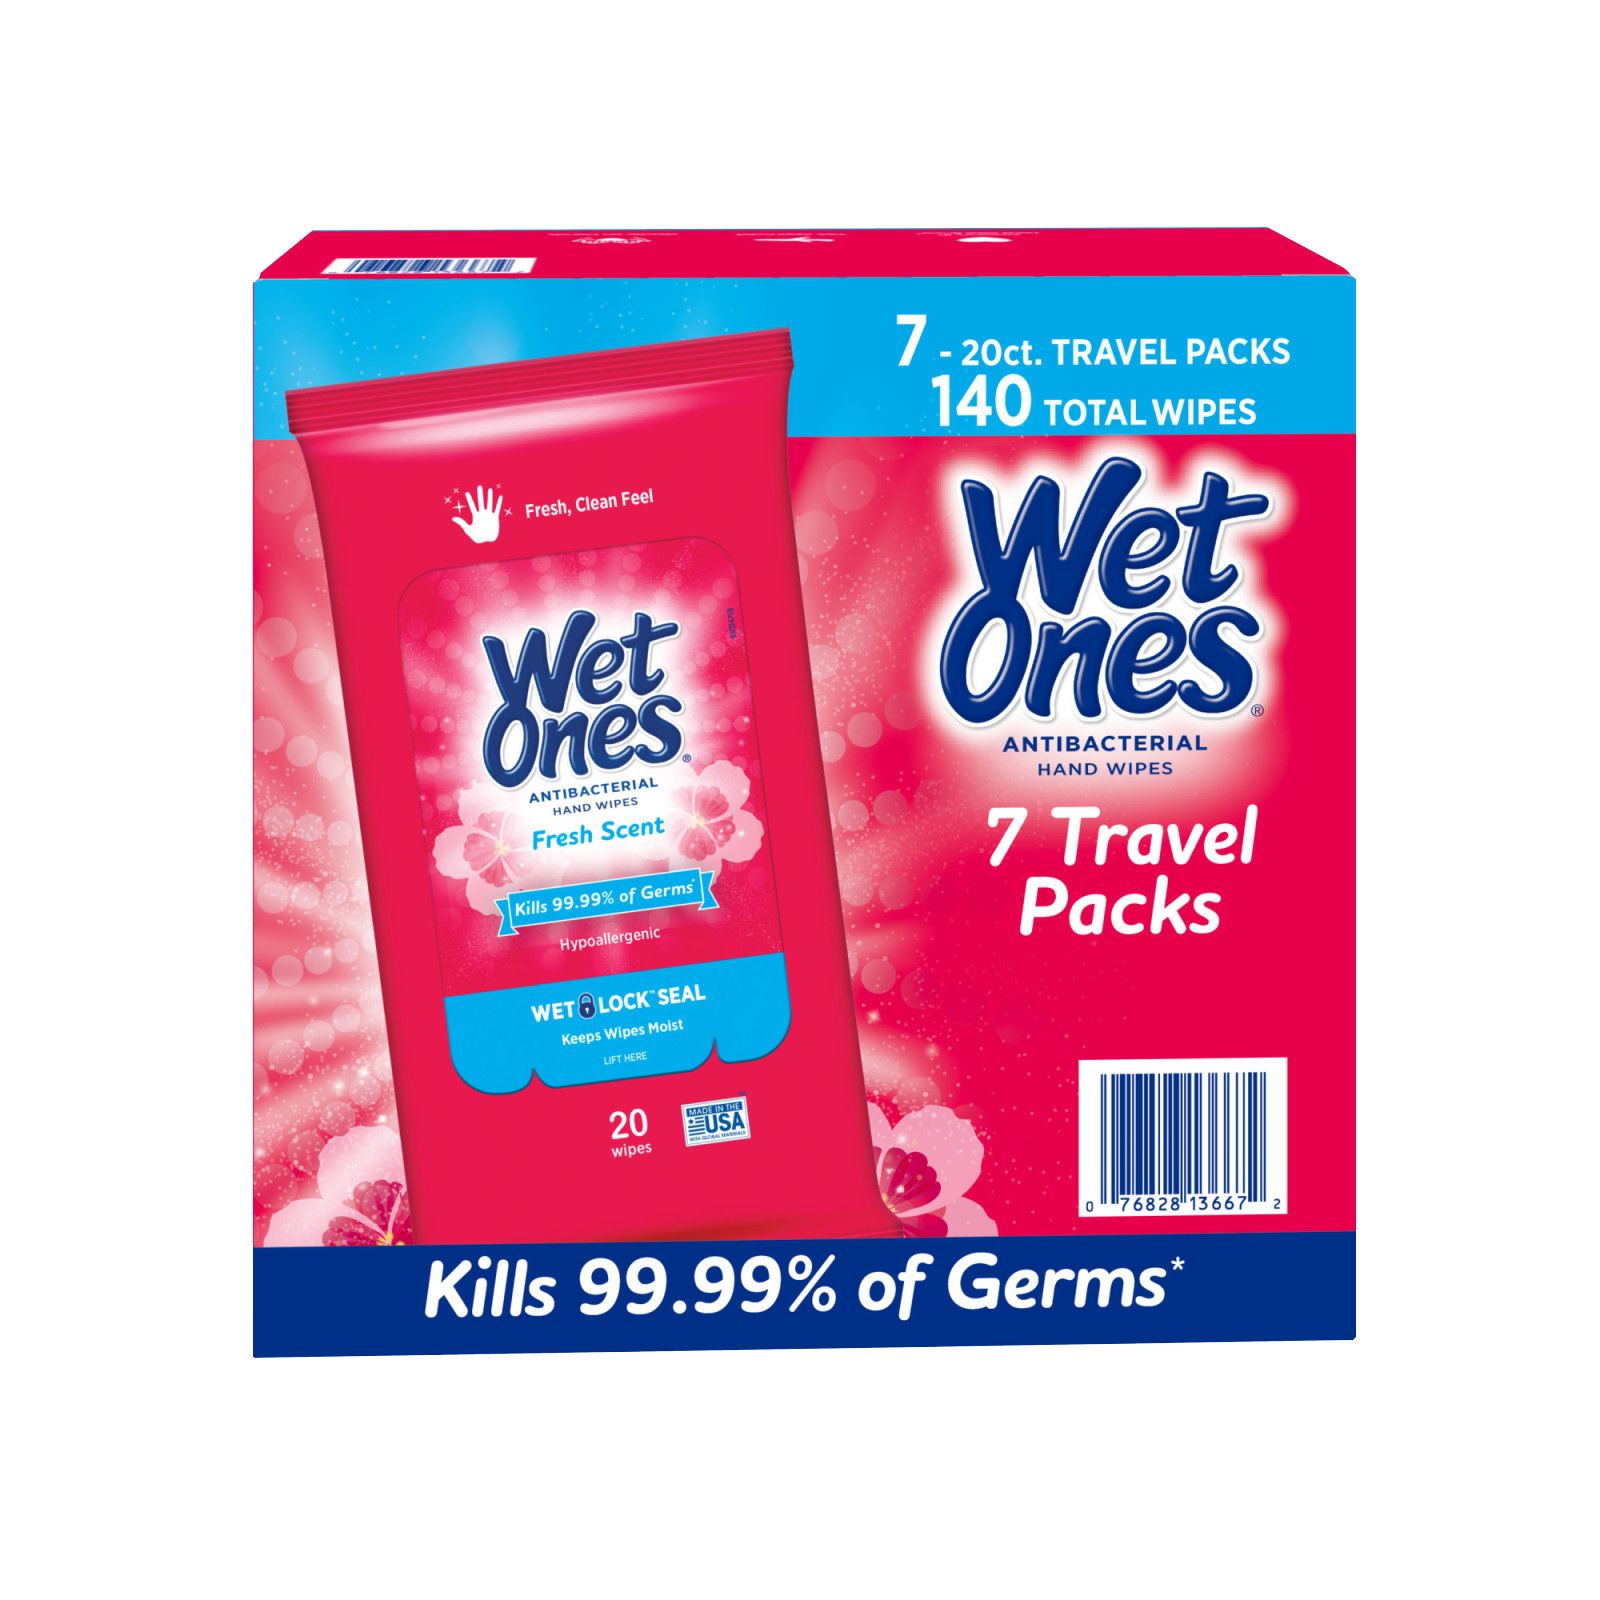 Wipe Essentials Antibacterial Hand Wipes - 30 ct